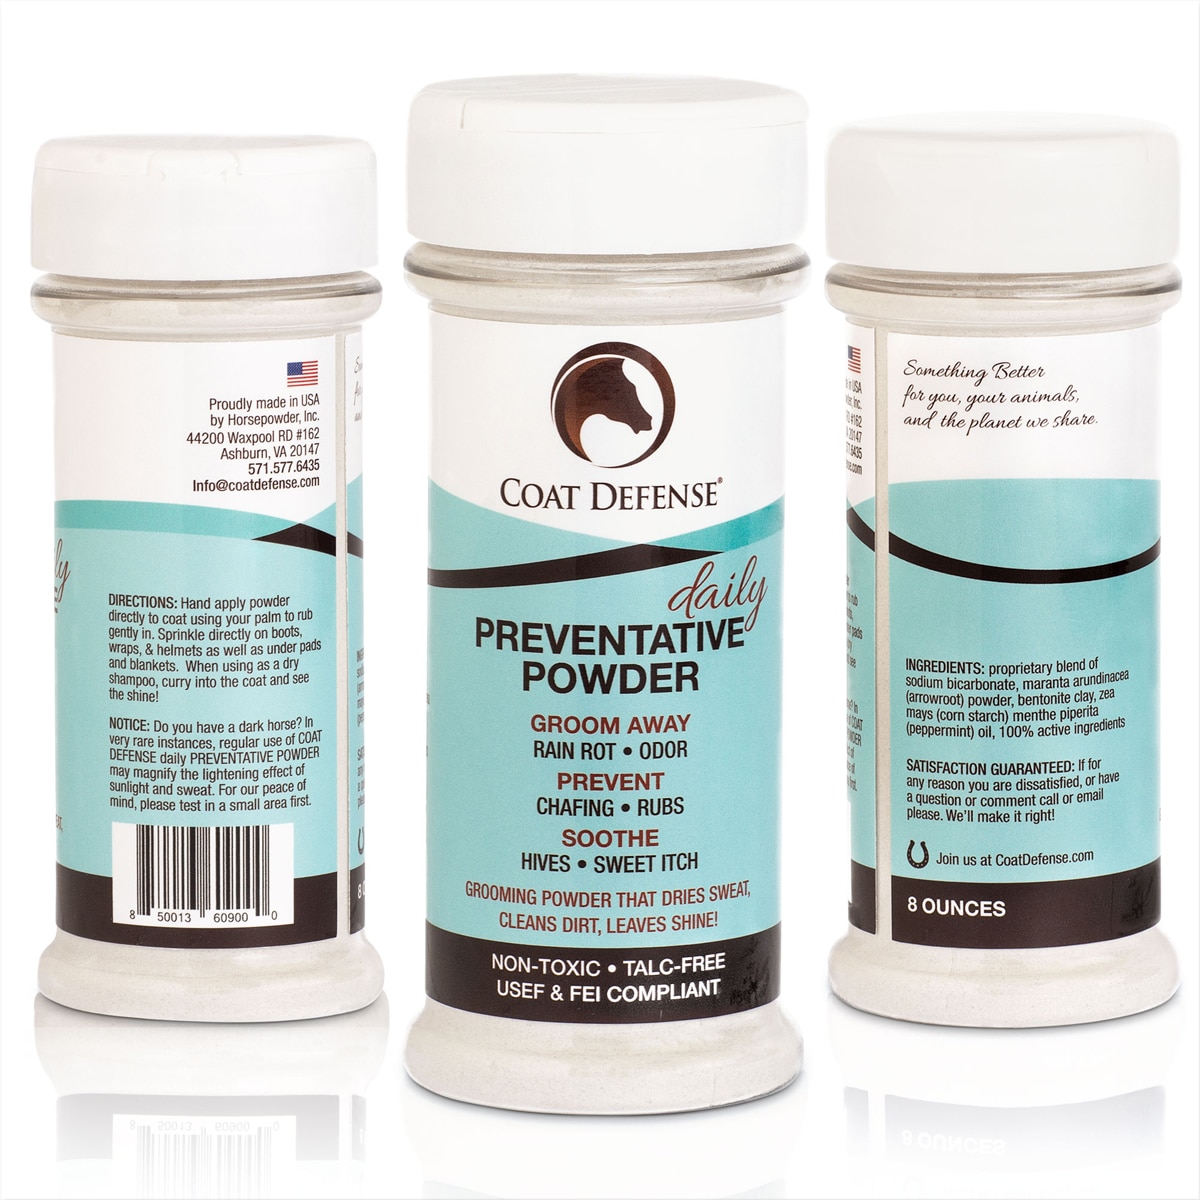 Coat Defense® Daily Preventative Powder